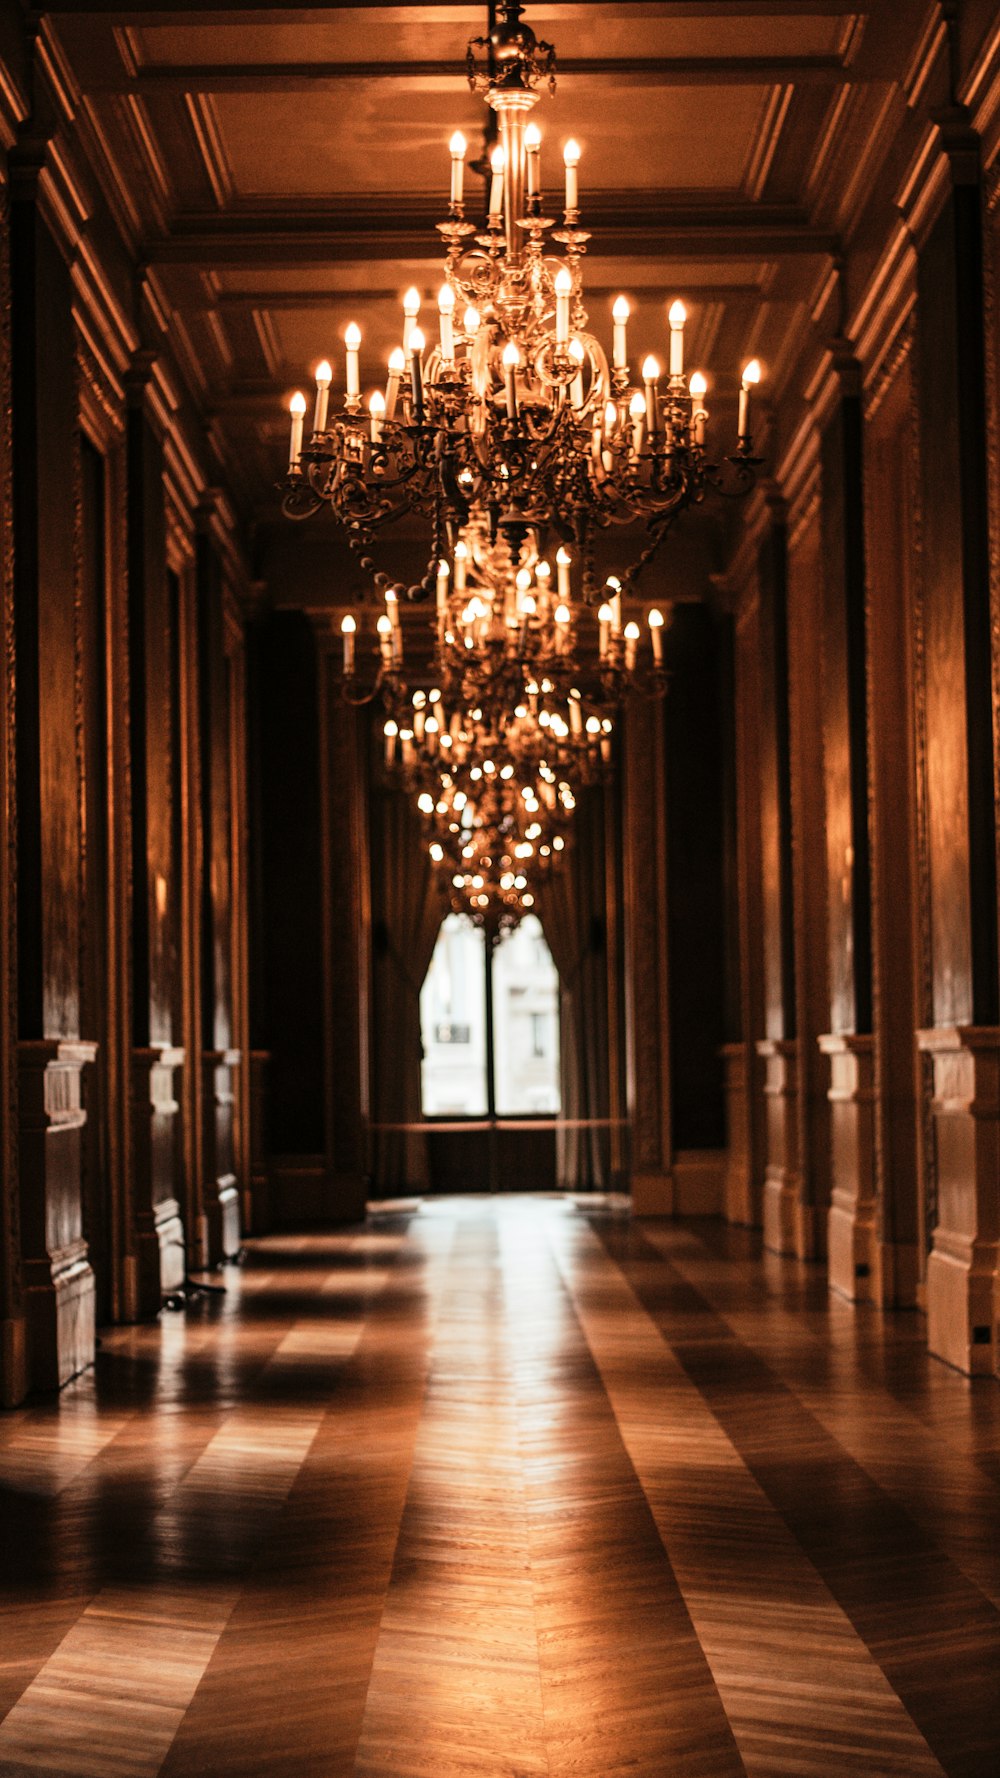 lightened chandelier inside the hall photo – Free Interior Image on Unsplash